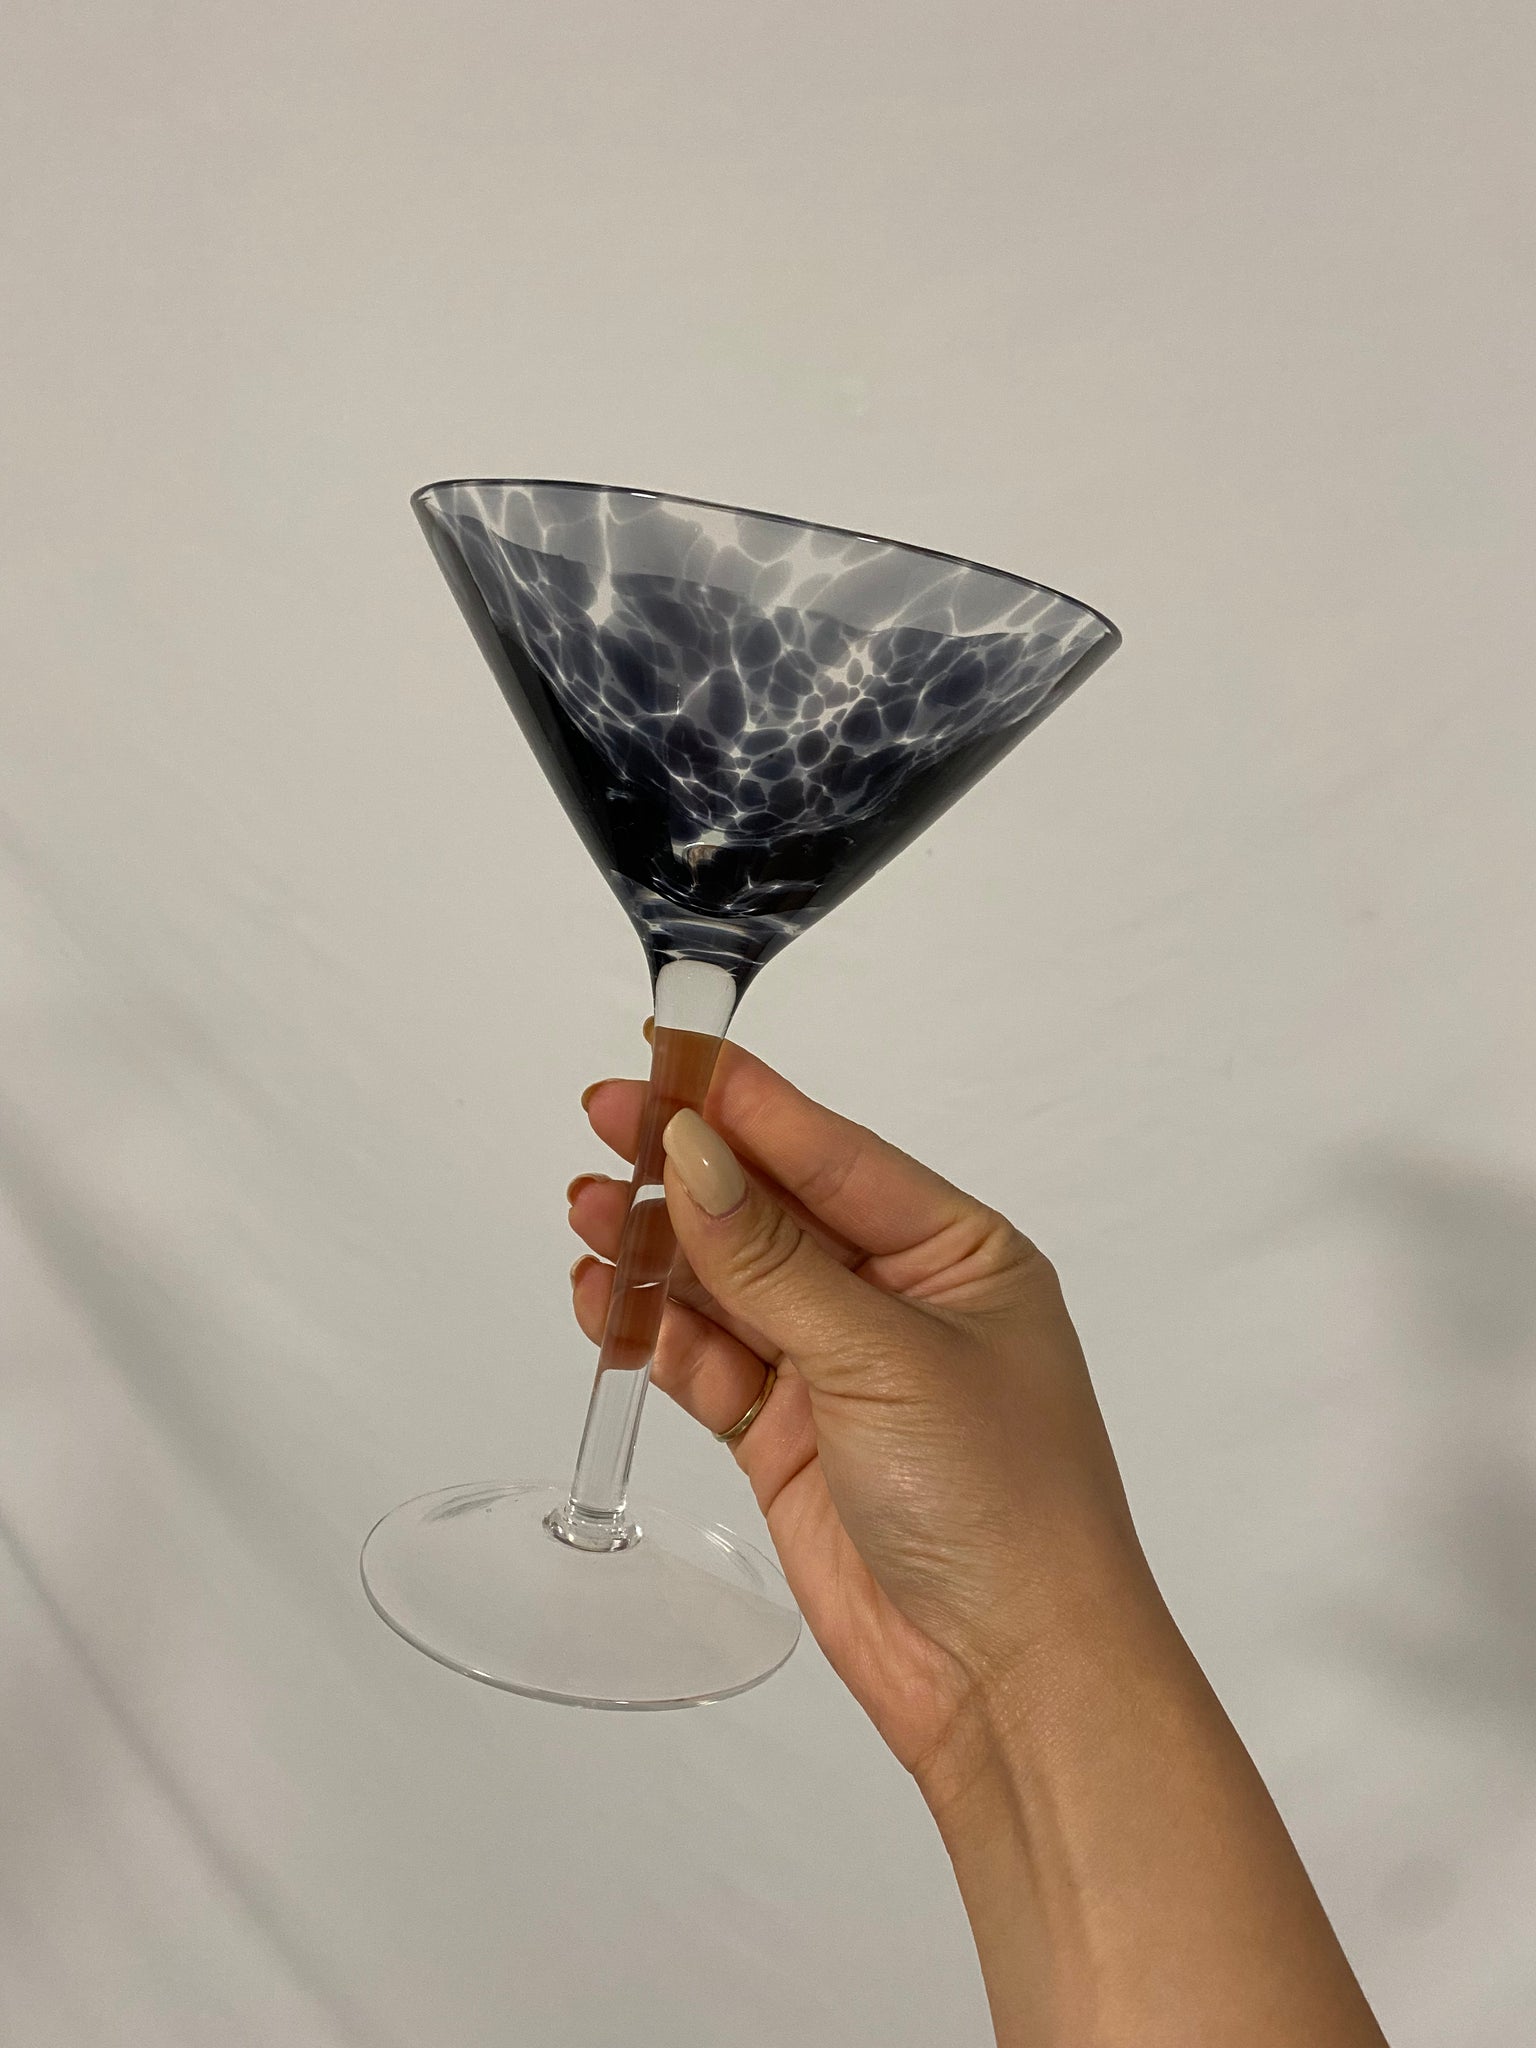 Speckled martini glasses